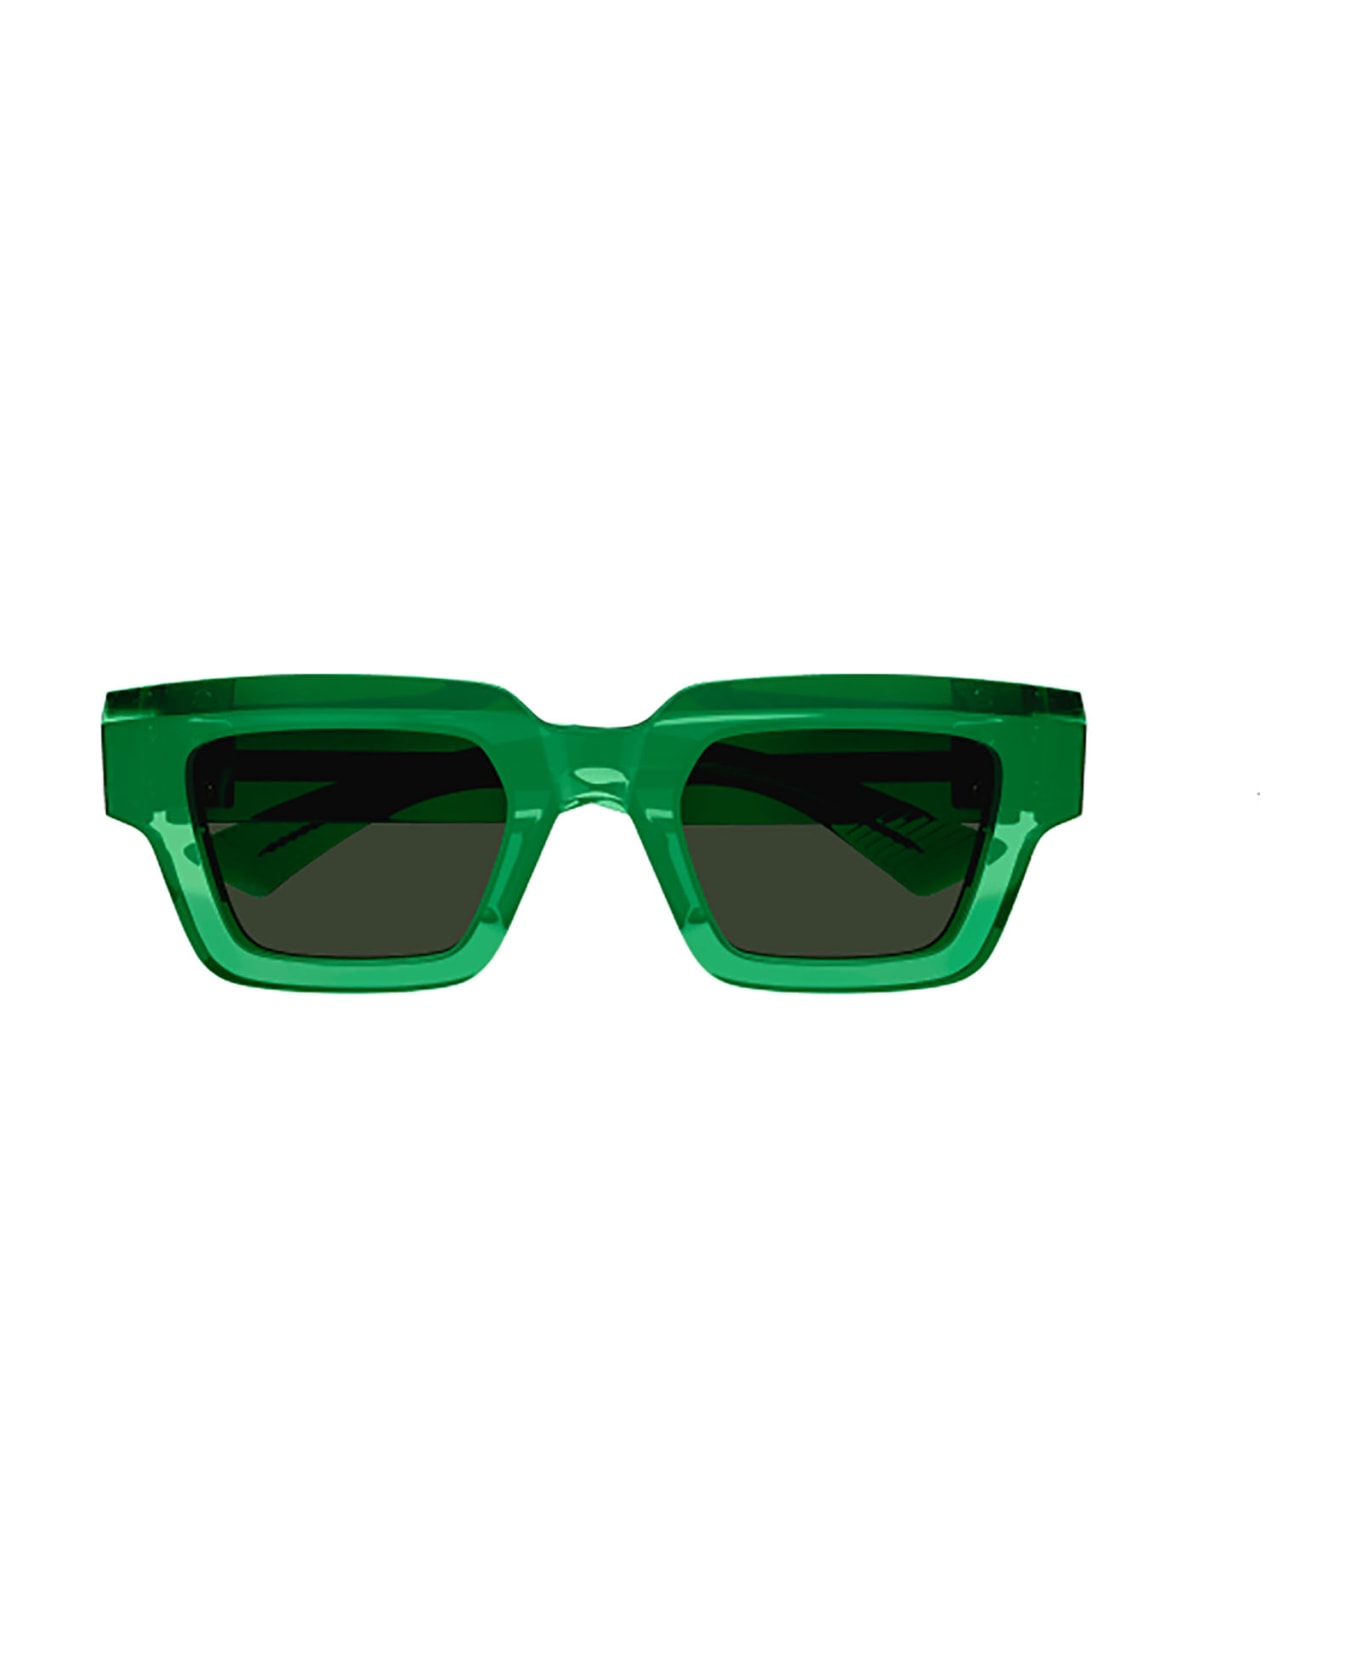 Bottega Veneta Eyewear 1g7r4ni0a - 002 green green green